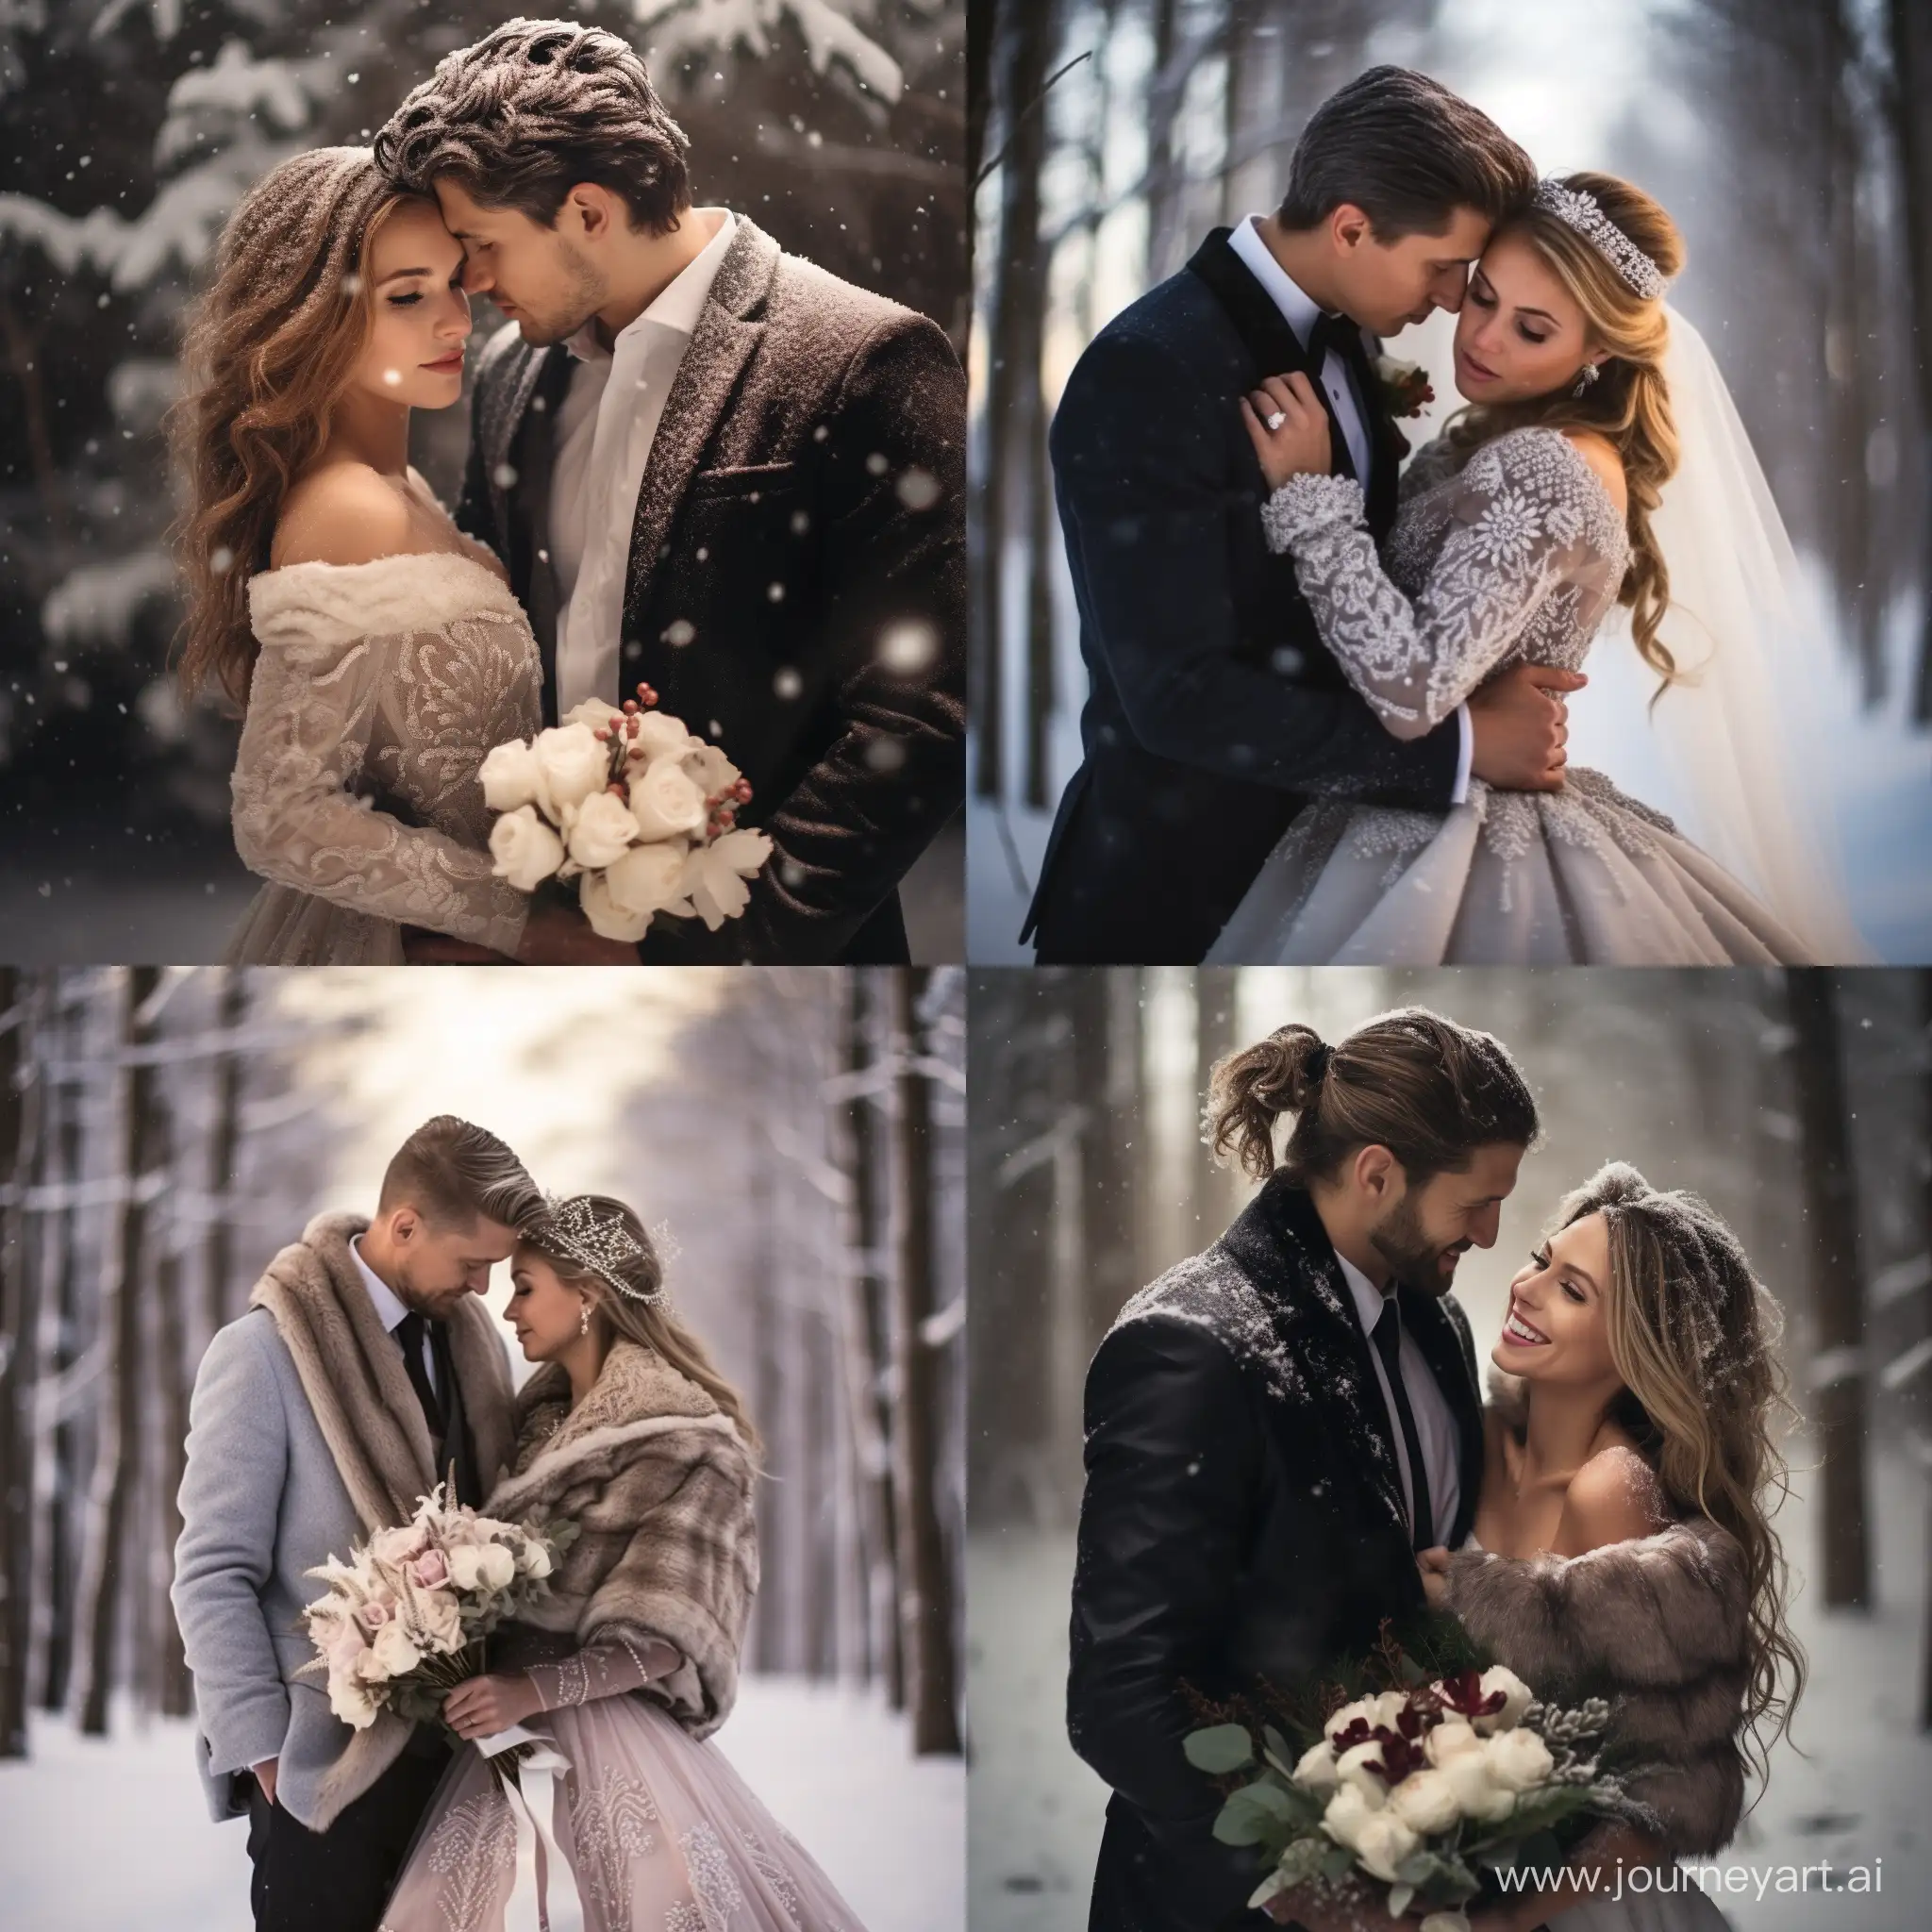 Elegant-Winter-Wedding-Photography-Captured-in-Square-Aspect-Ratio